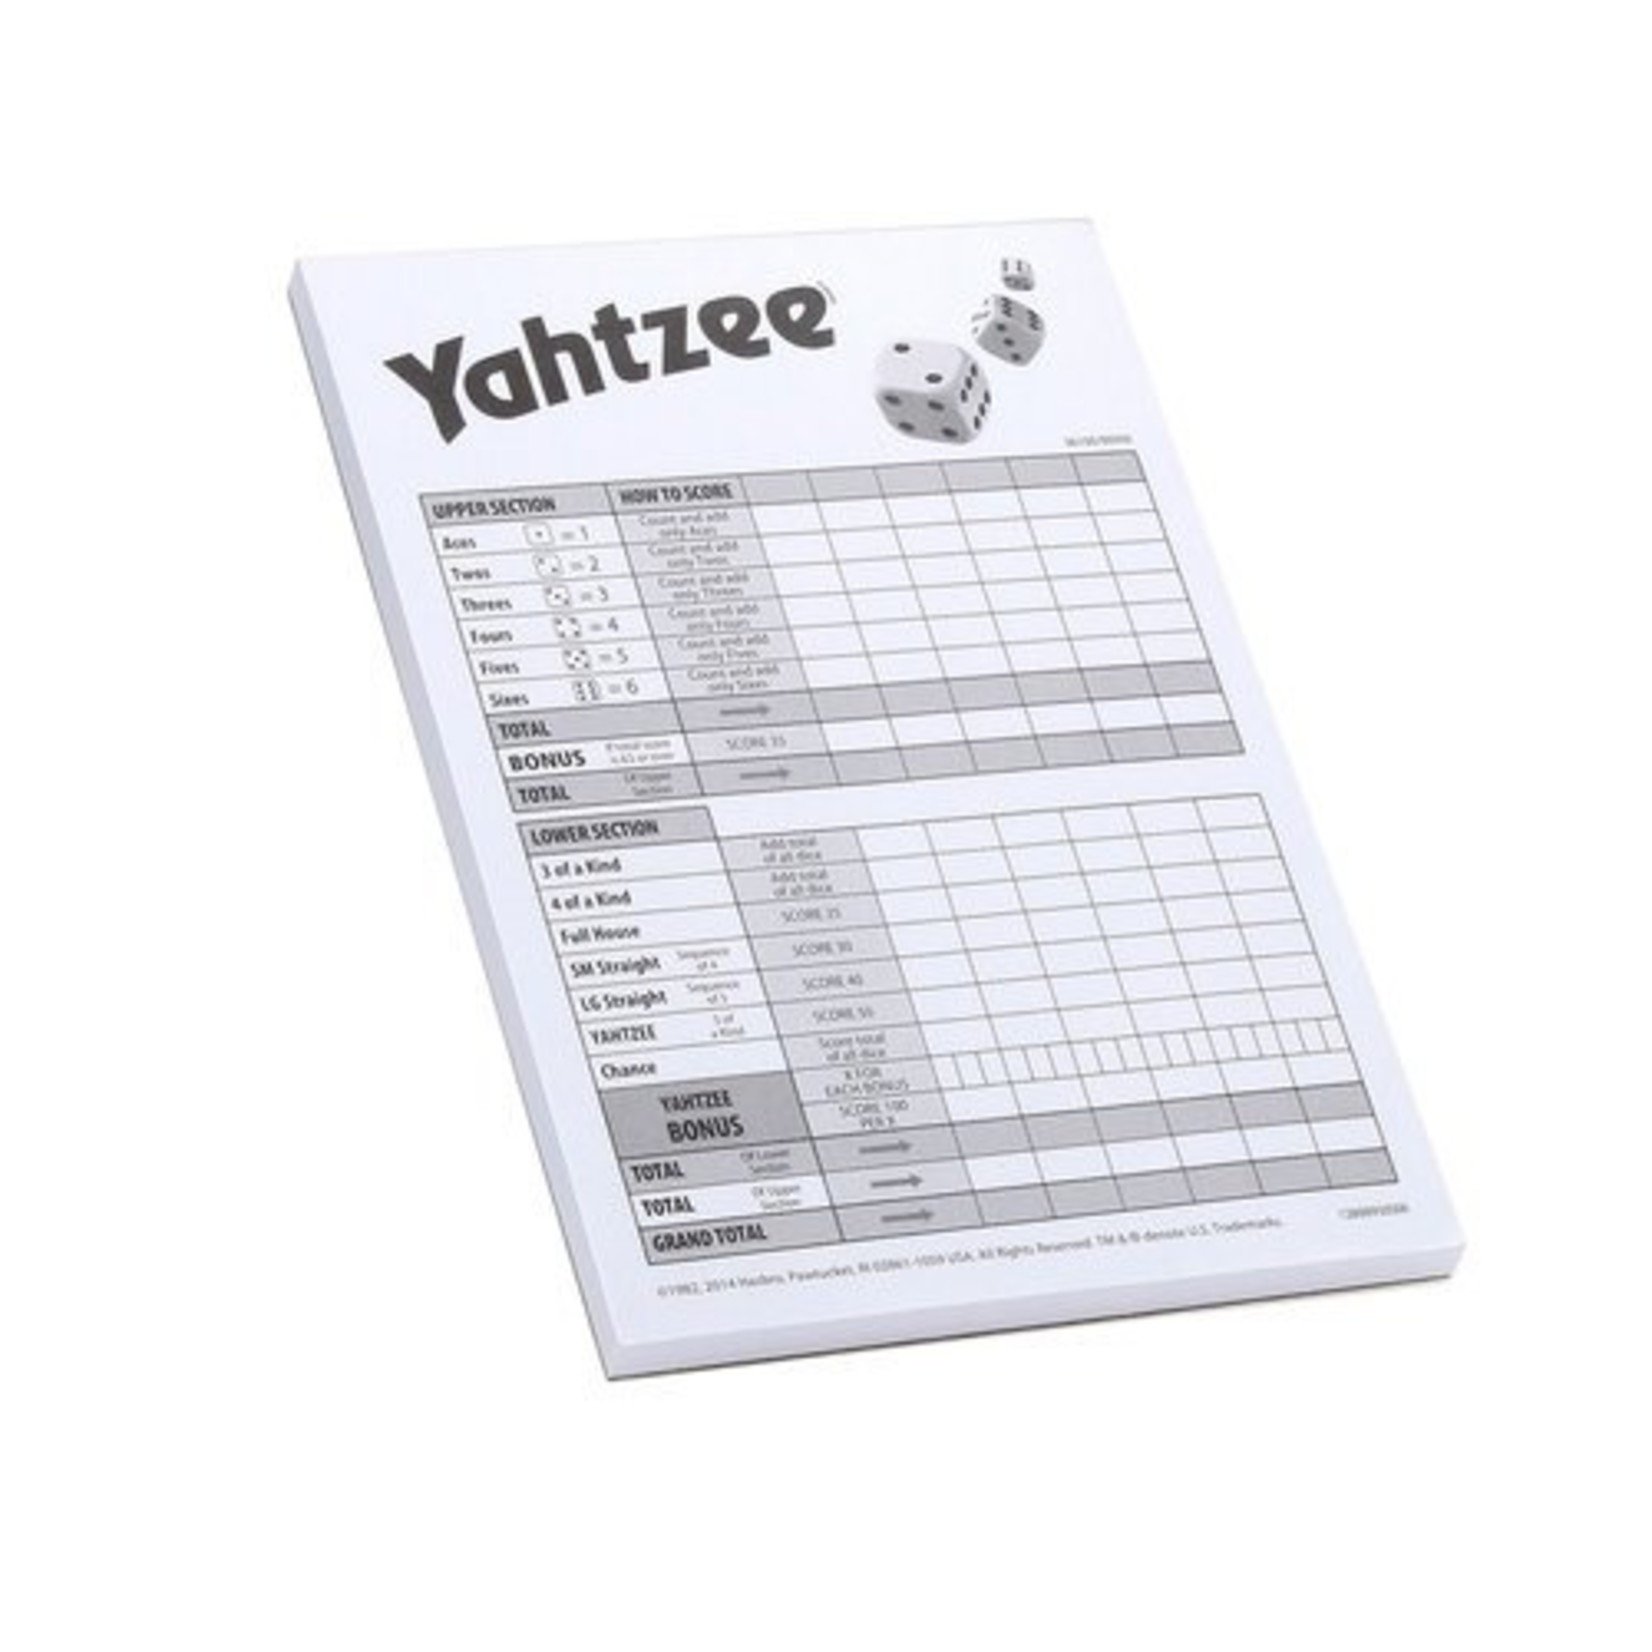 Hasbro Yahtzee Score Pads